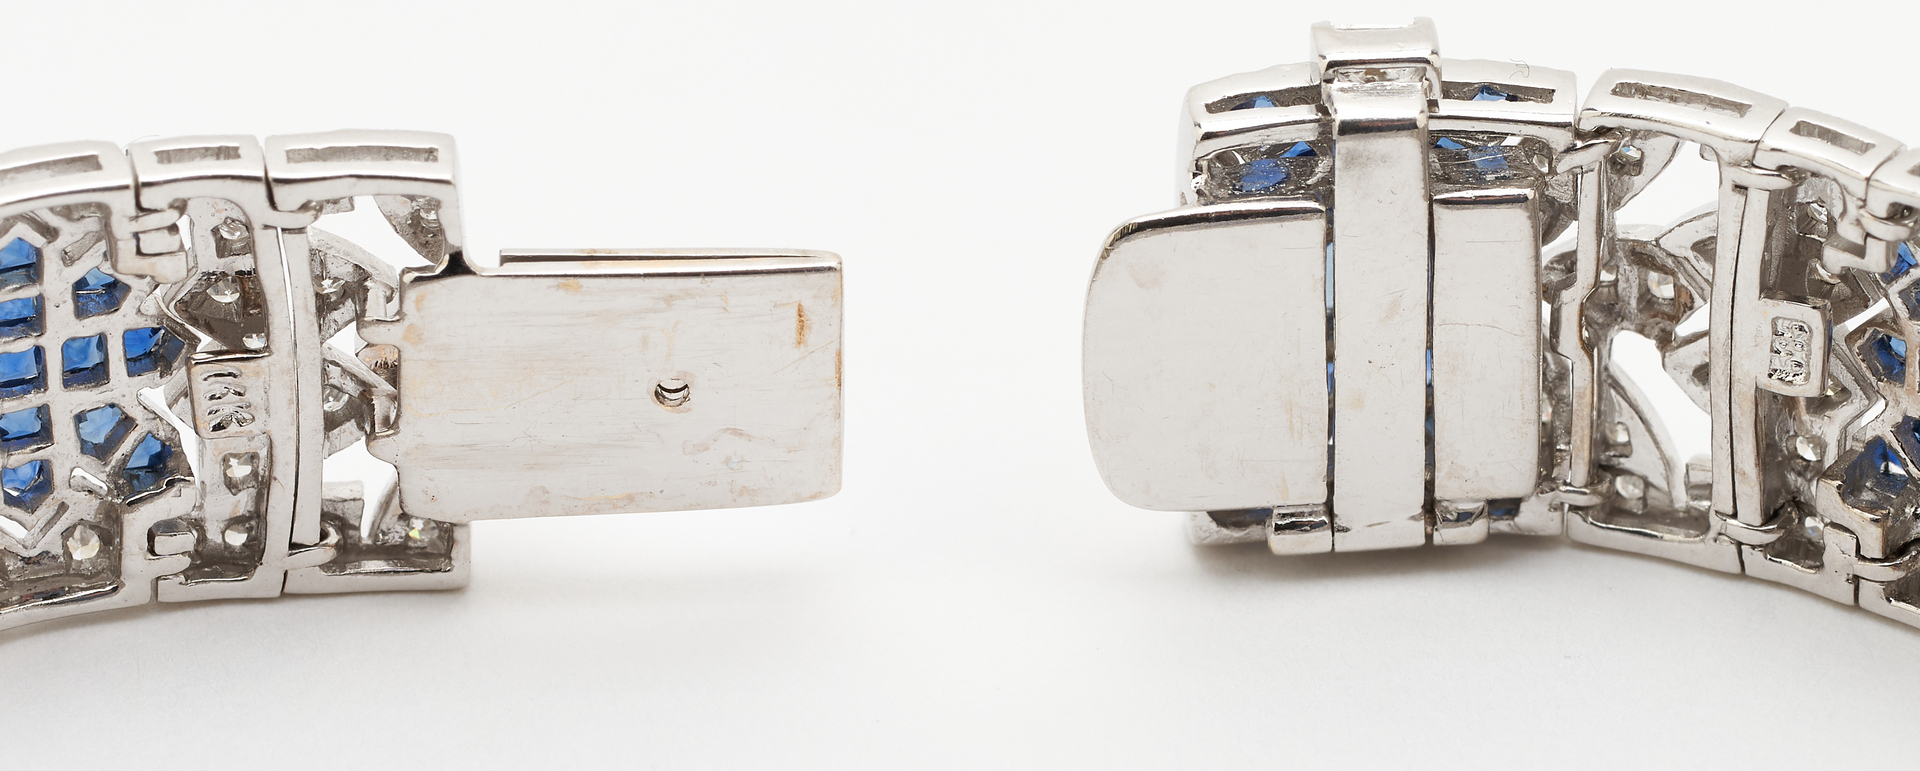 Lot 44: 14K Art Deco Diamond & Sapphire Bracelet